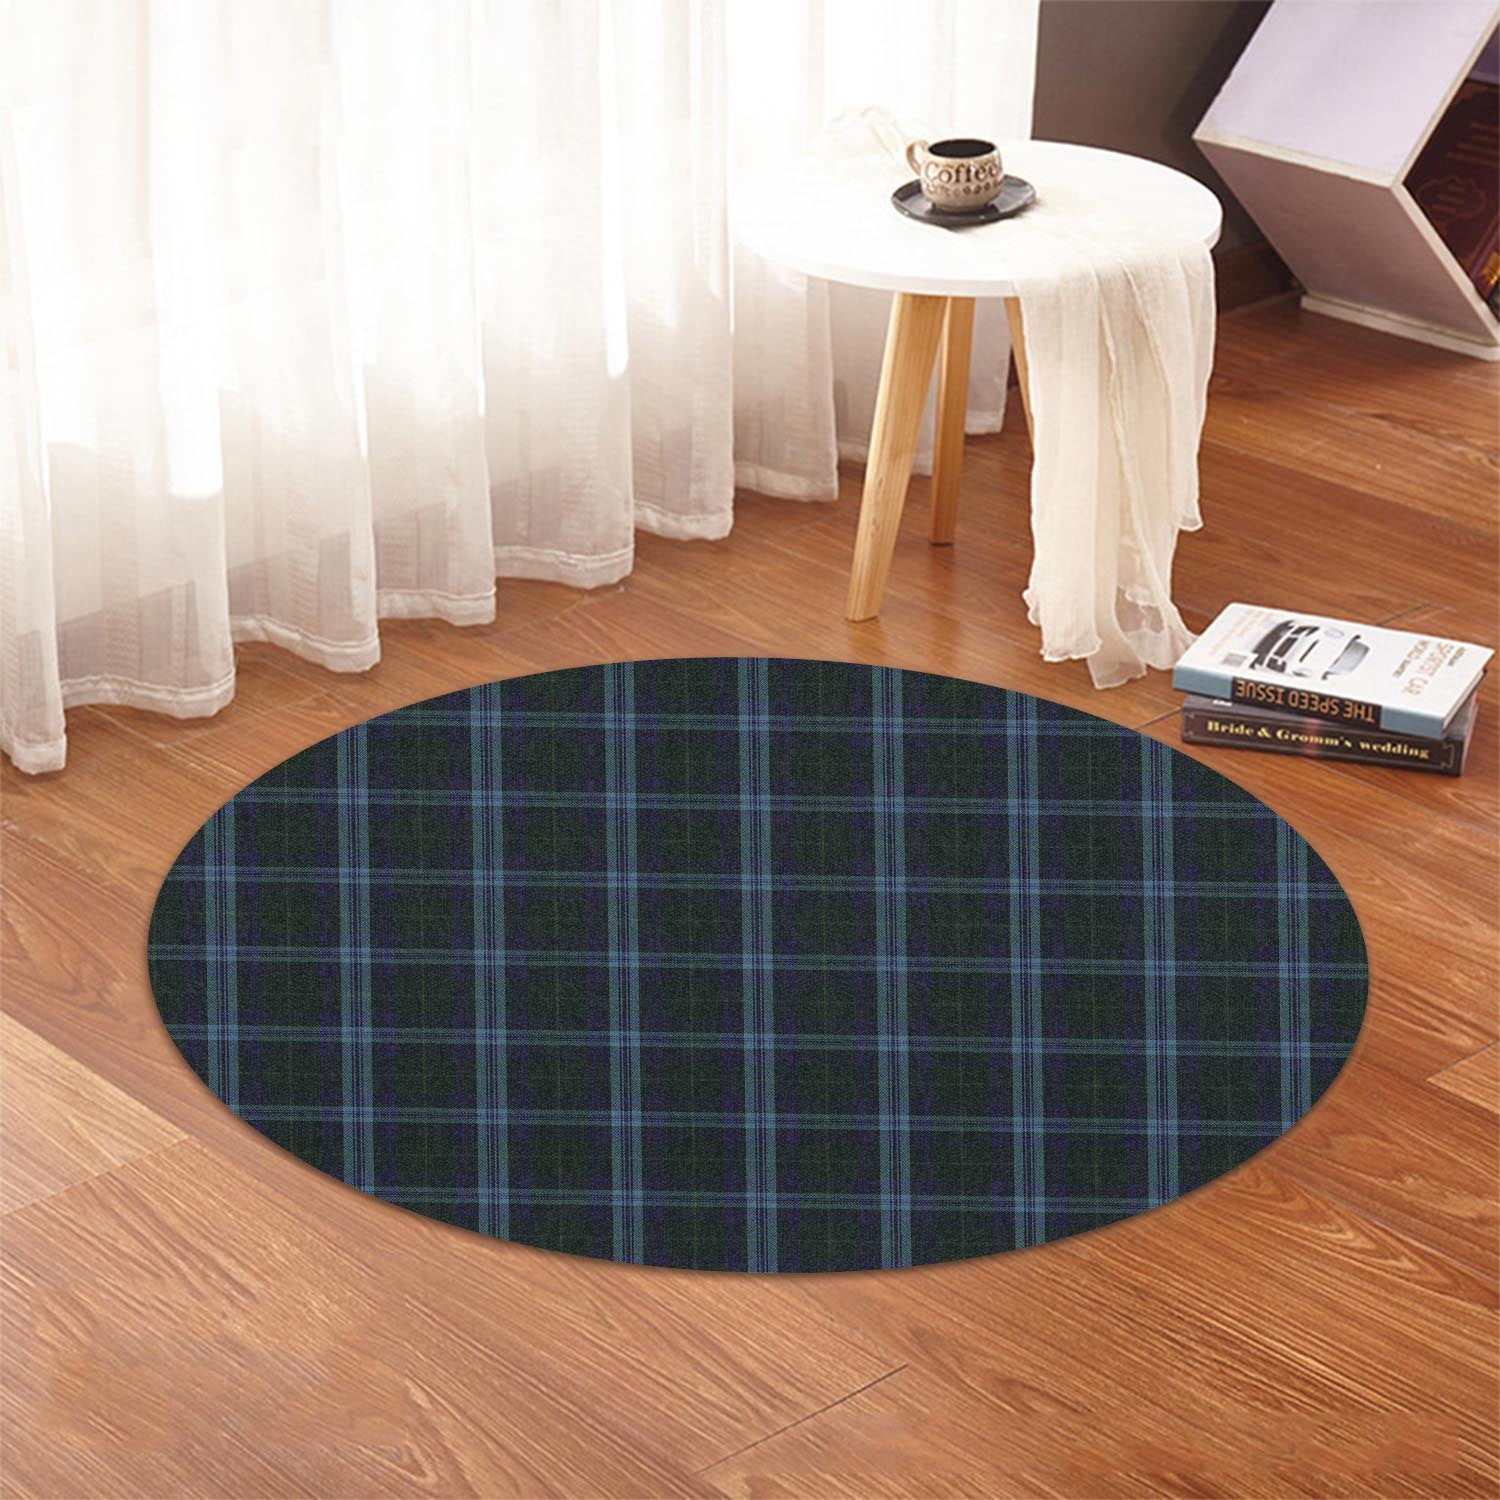 jones-of-wales-tartan-round-rug